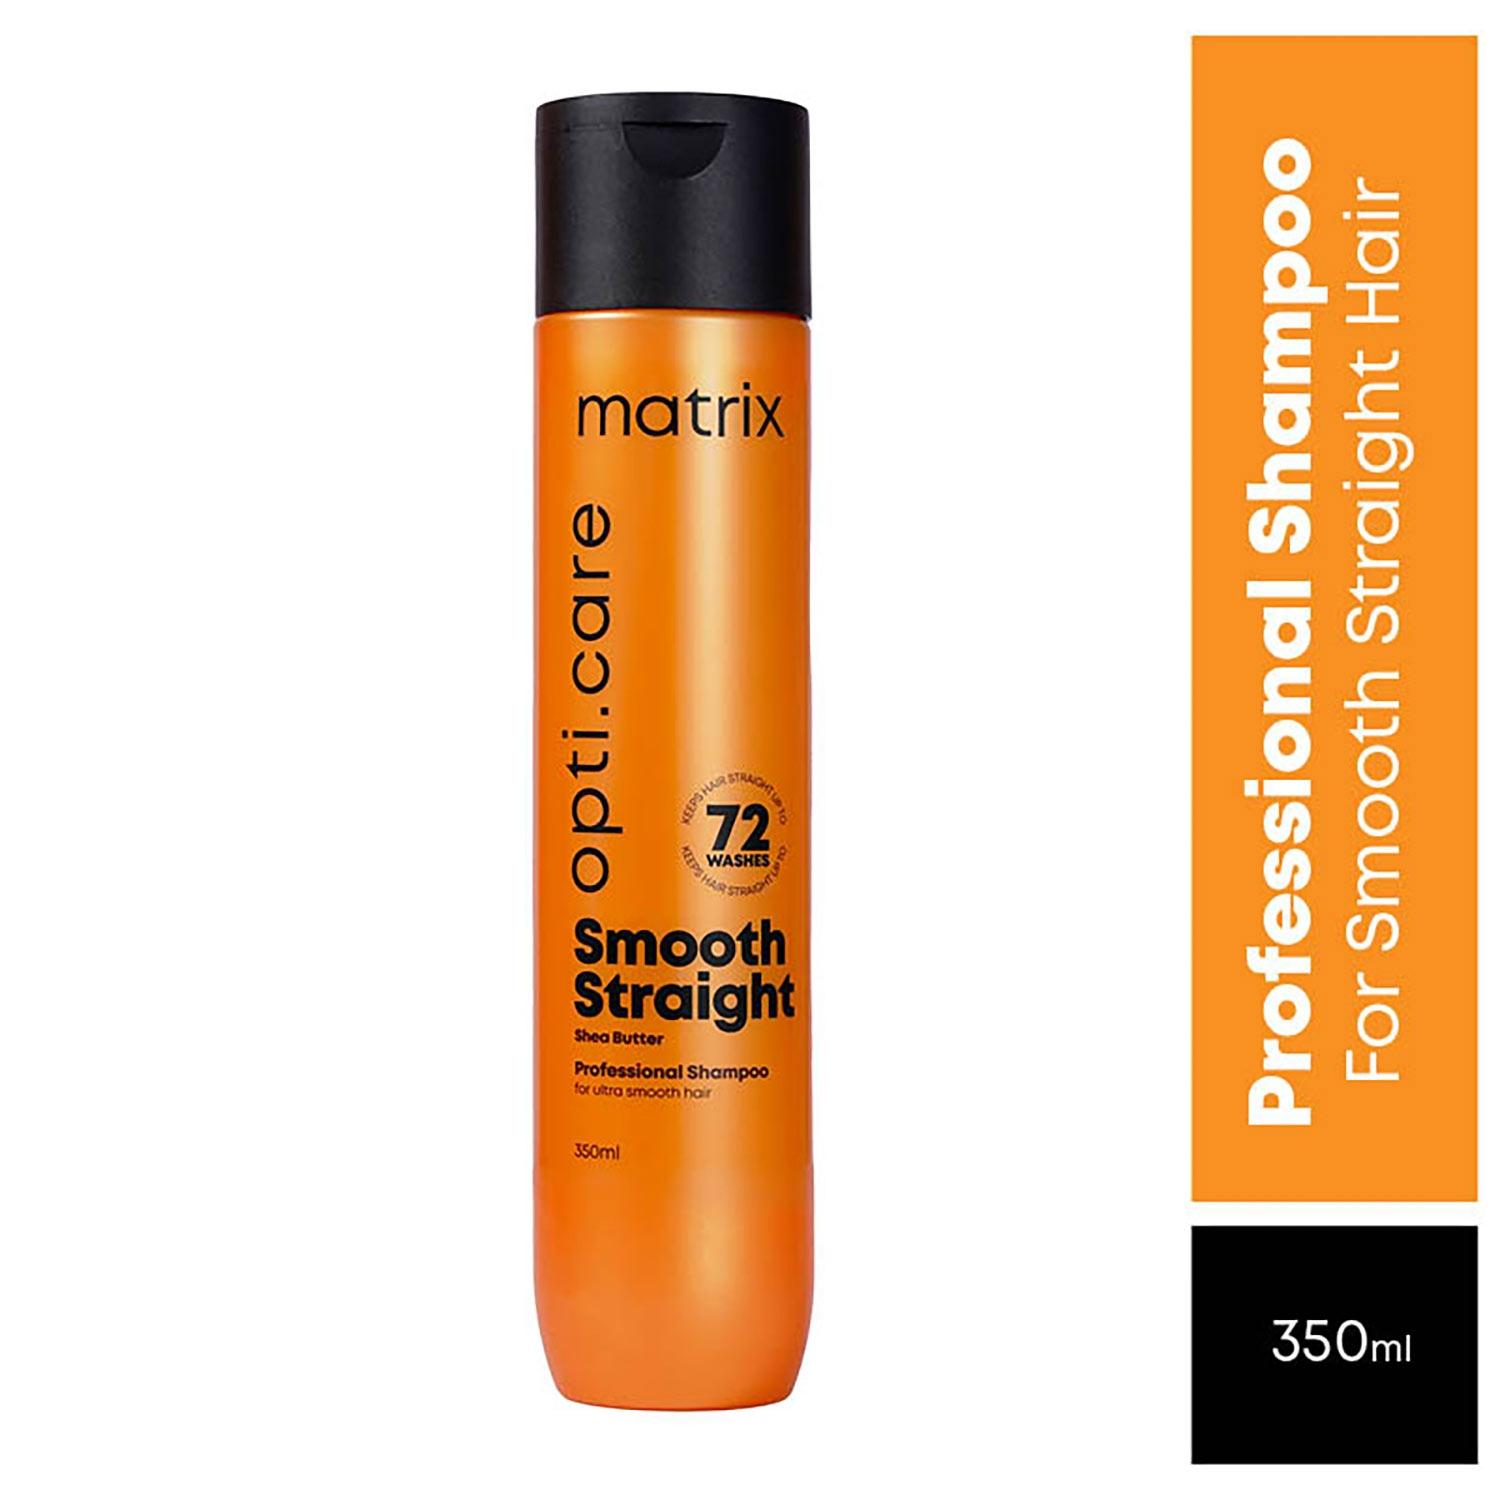 matrix opti care smooth straight professional shampoo (350ml)